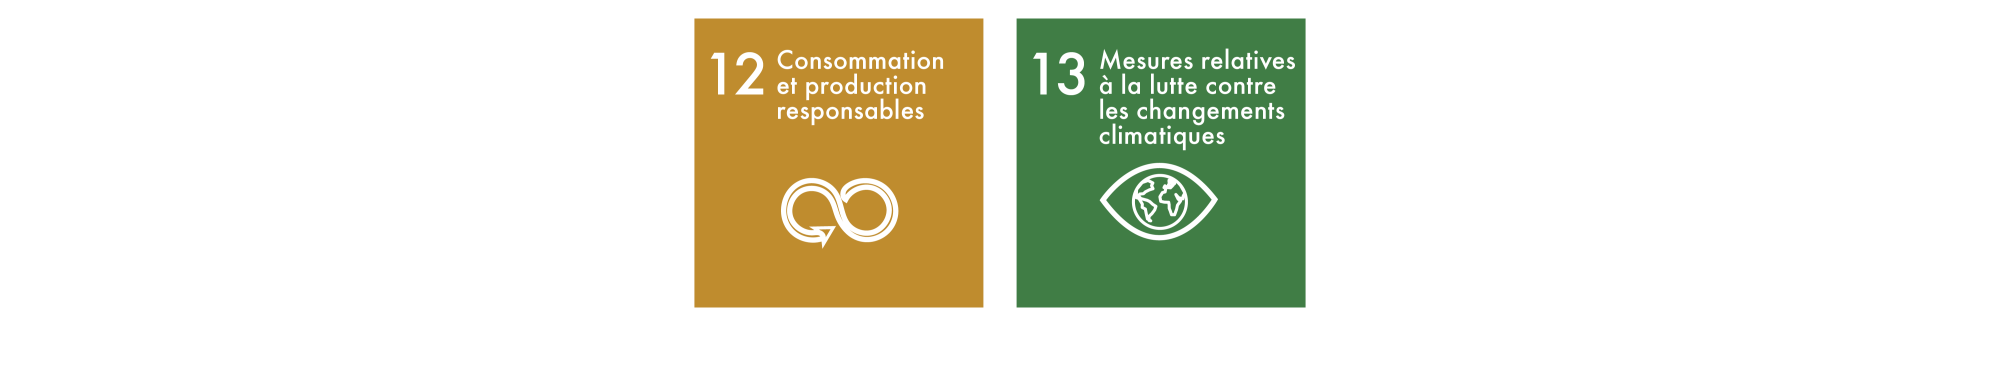 Sustainable Development Goals 12-13 FR